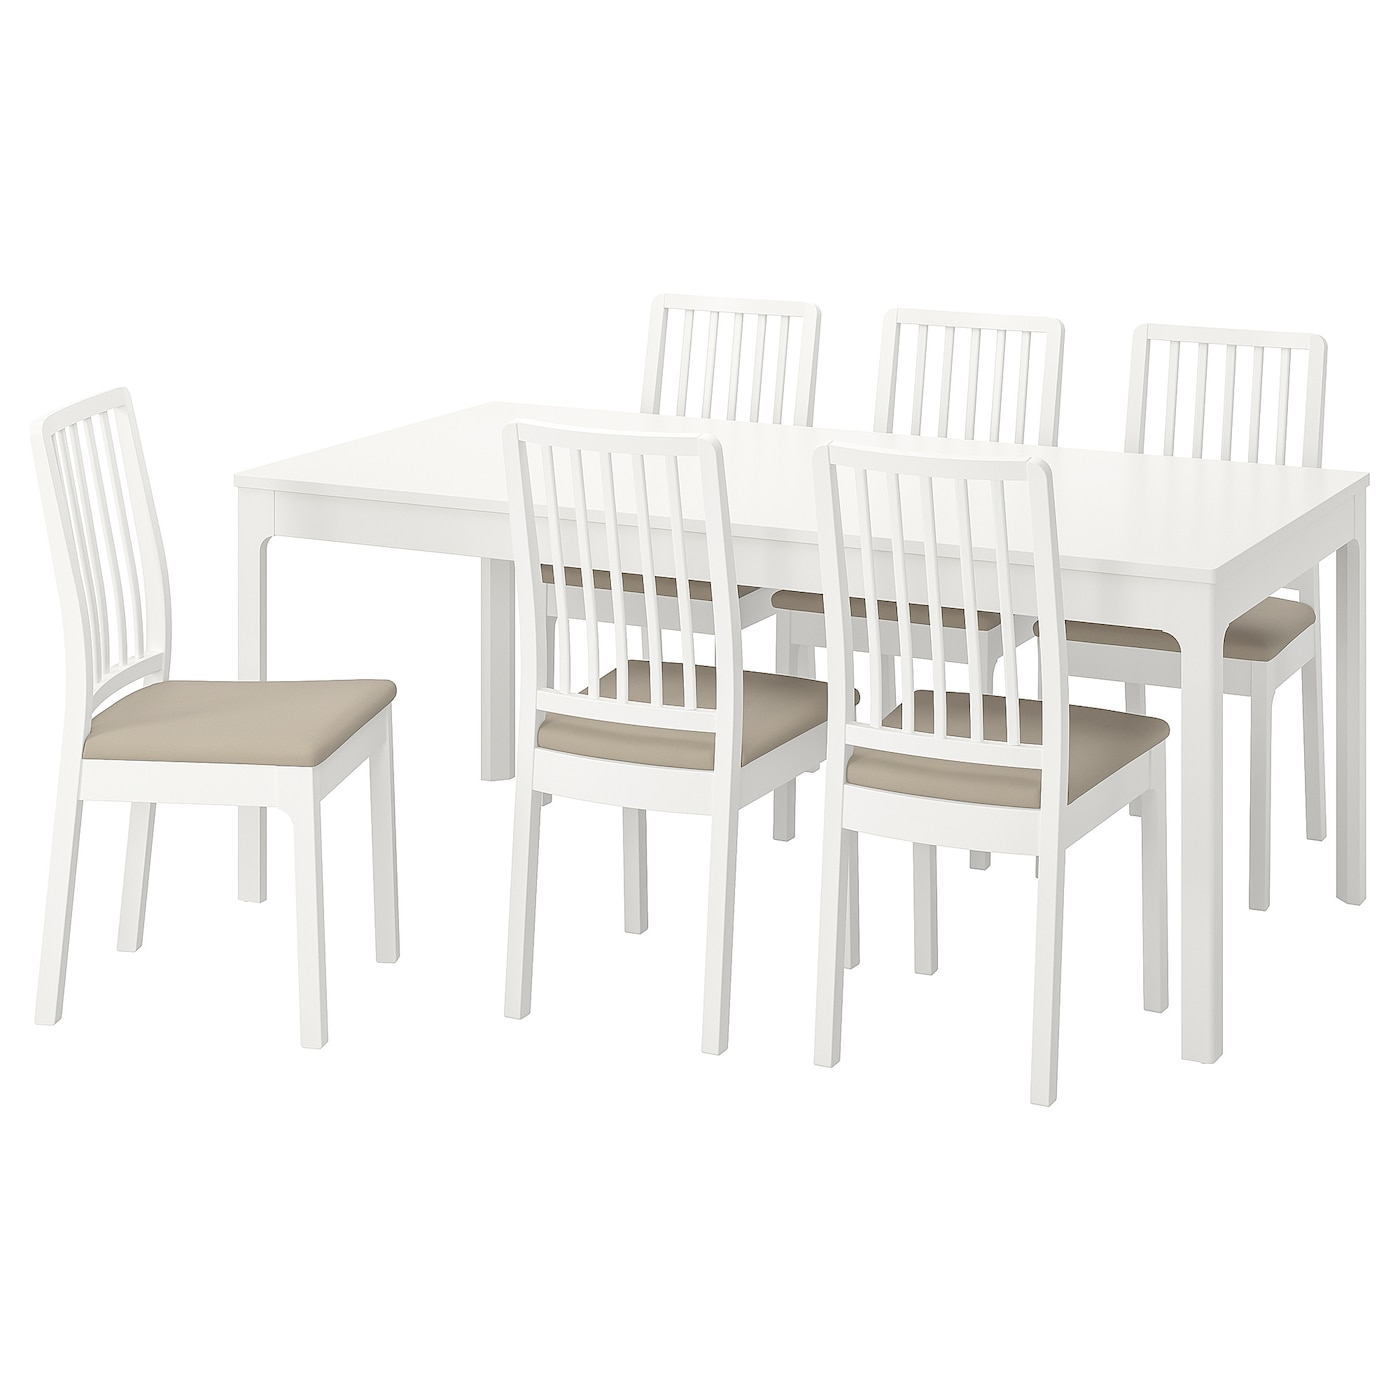 Стол и 6 стульев - IKEA EKEDALEN/ЭКЕДАЛЕН ИКЕА, 180х240х90 см, белый/бежевый